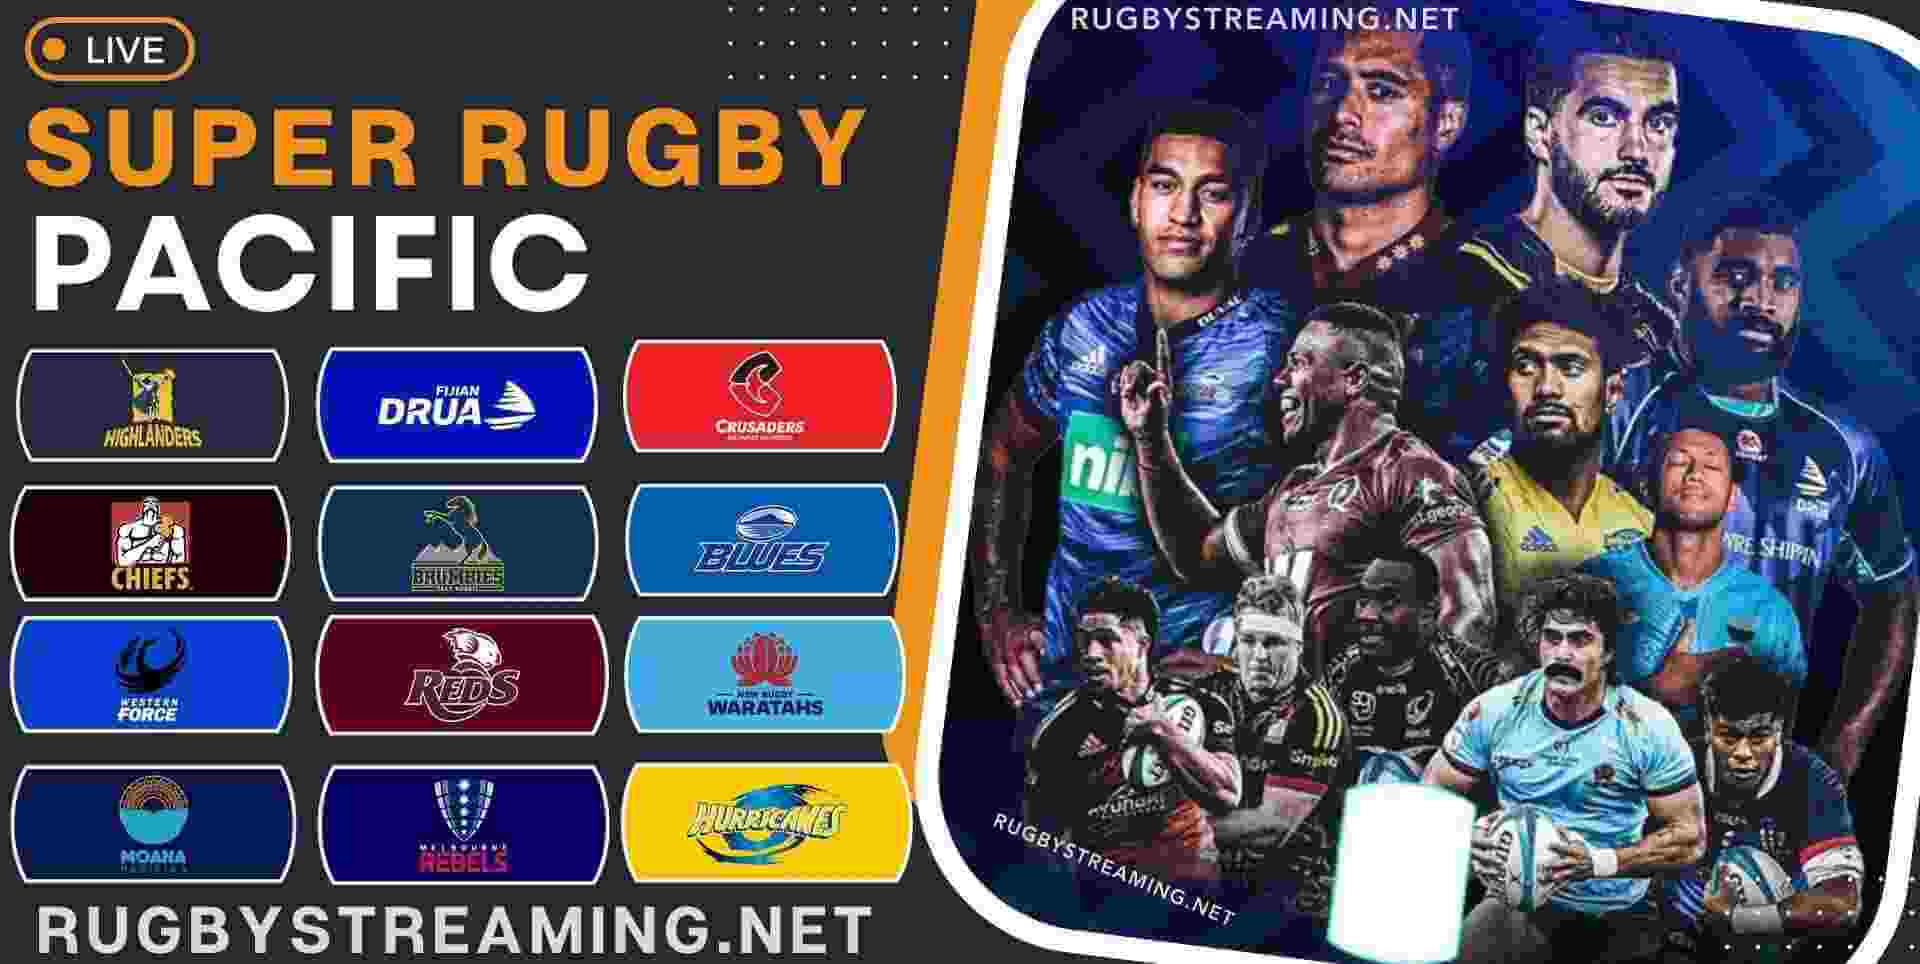 moana-pasifika-vs-rebels-live-stream-rugby